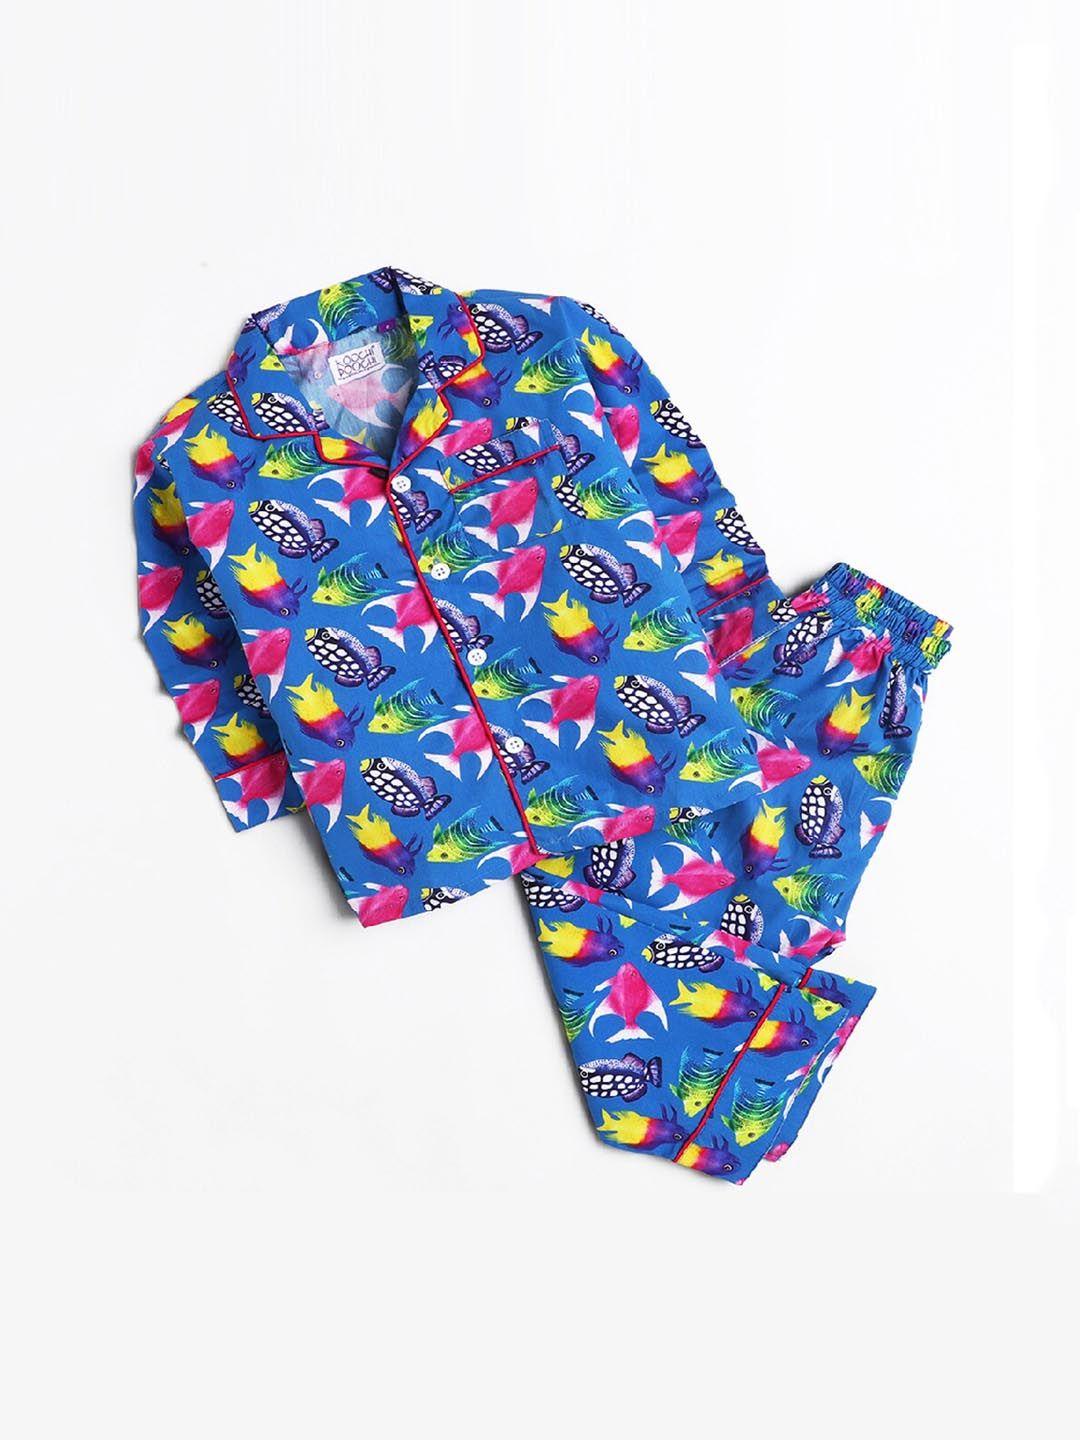 koochi poochi unisex kids blue & pink printed night suit